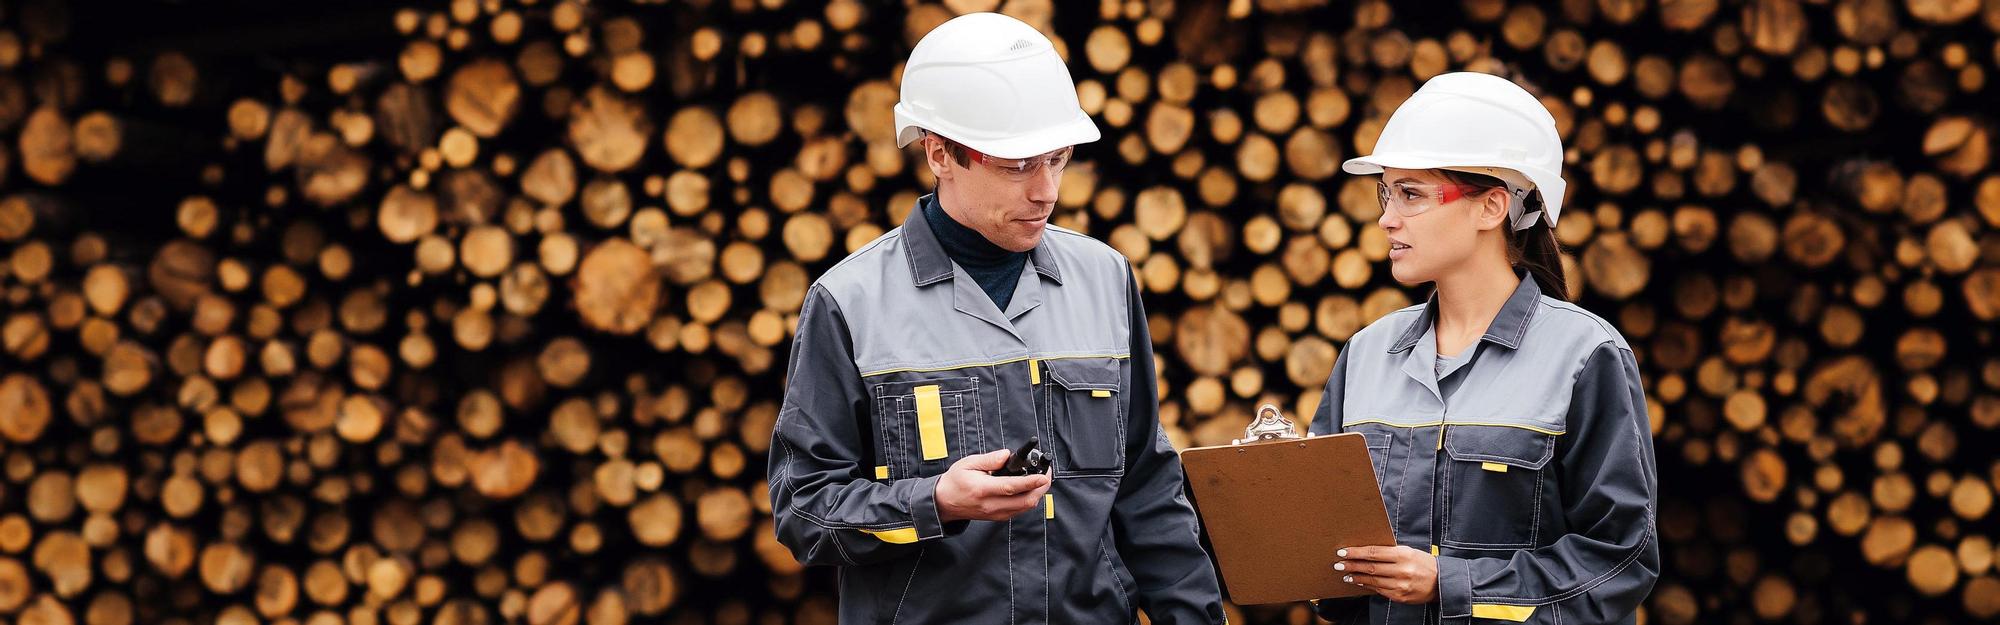 Wood worker storage checking tree resource lumber